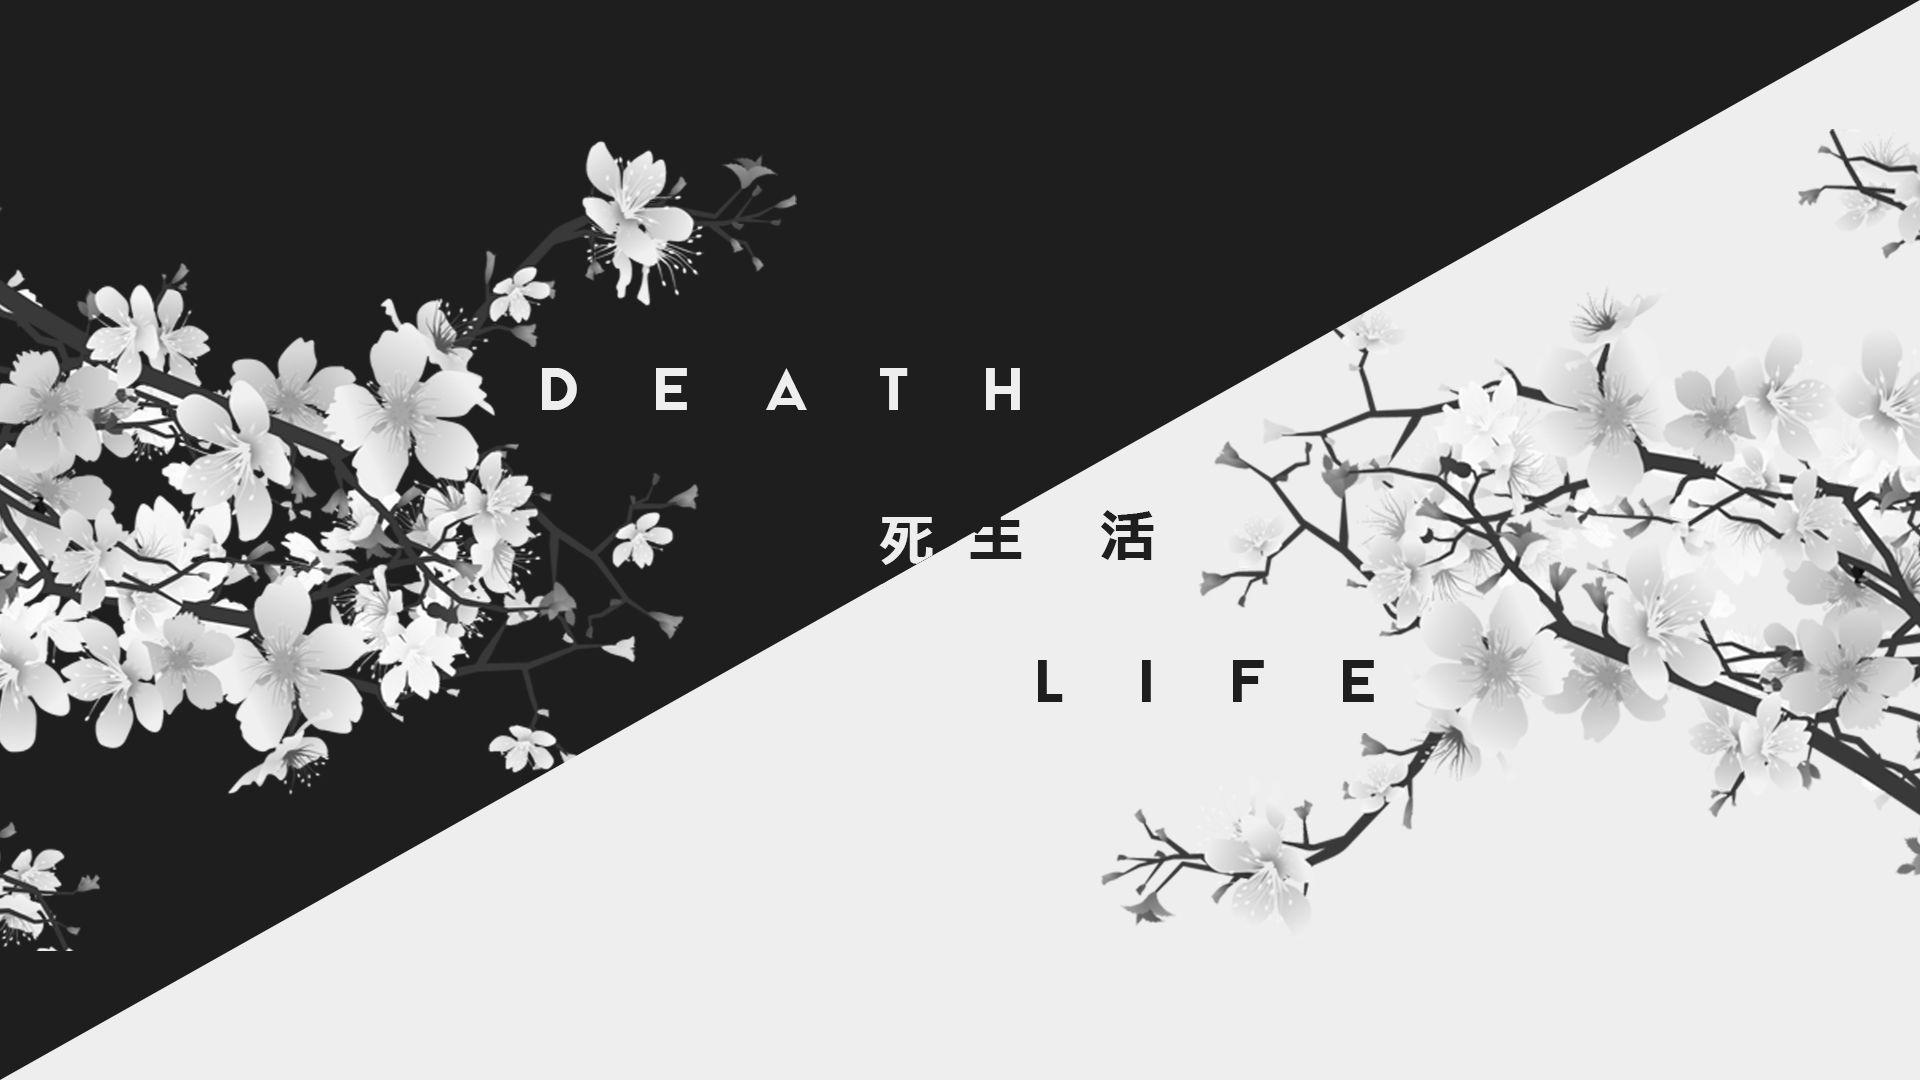 Life and Death Wallpaper Free .wallpaperaccess.com